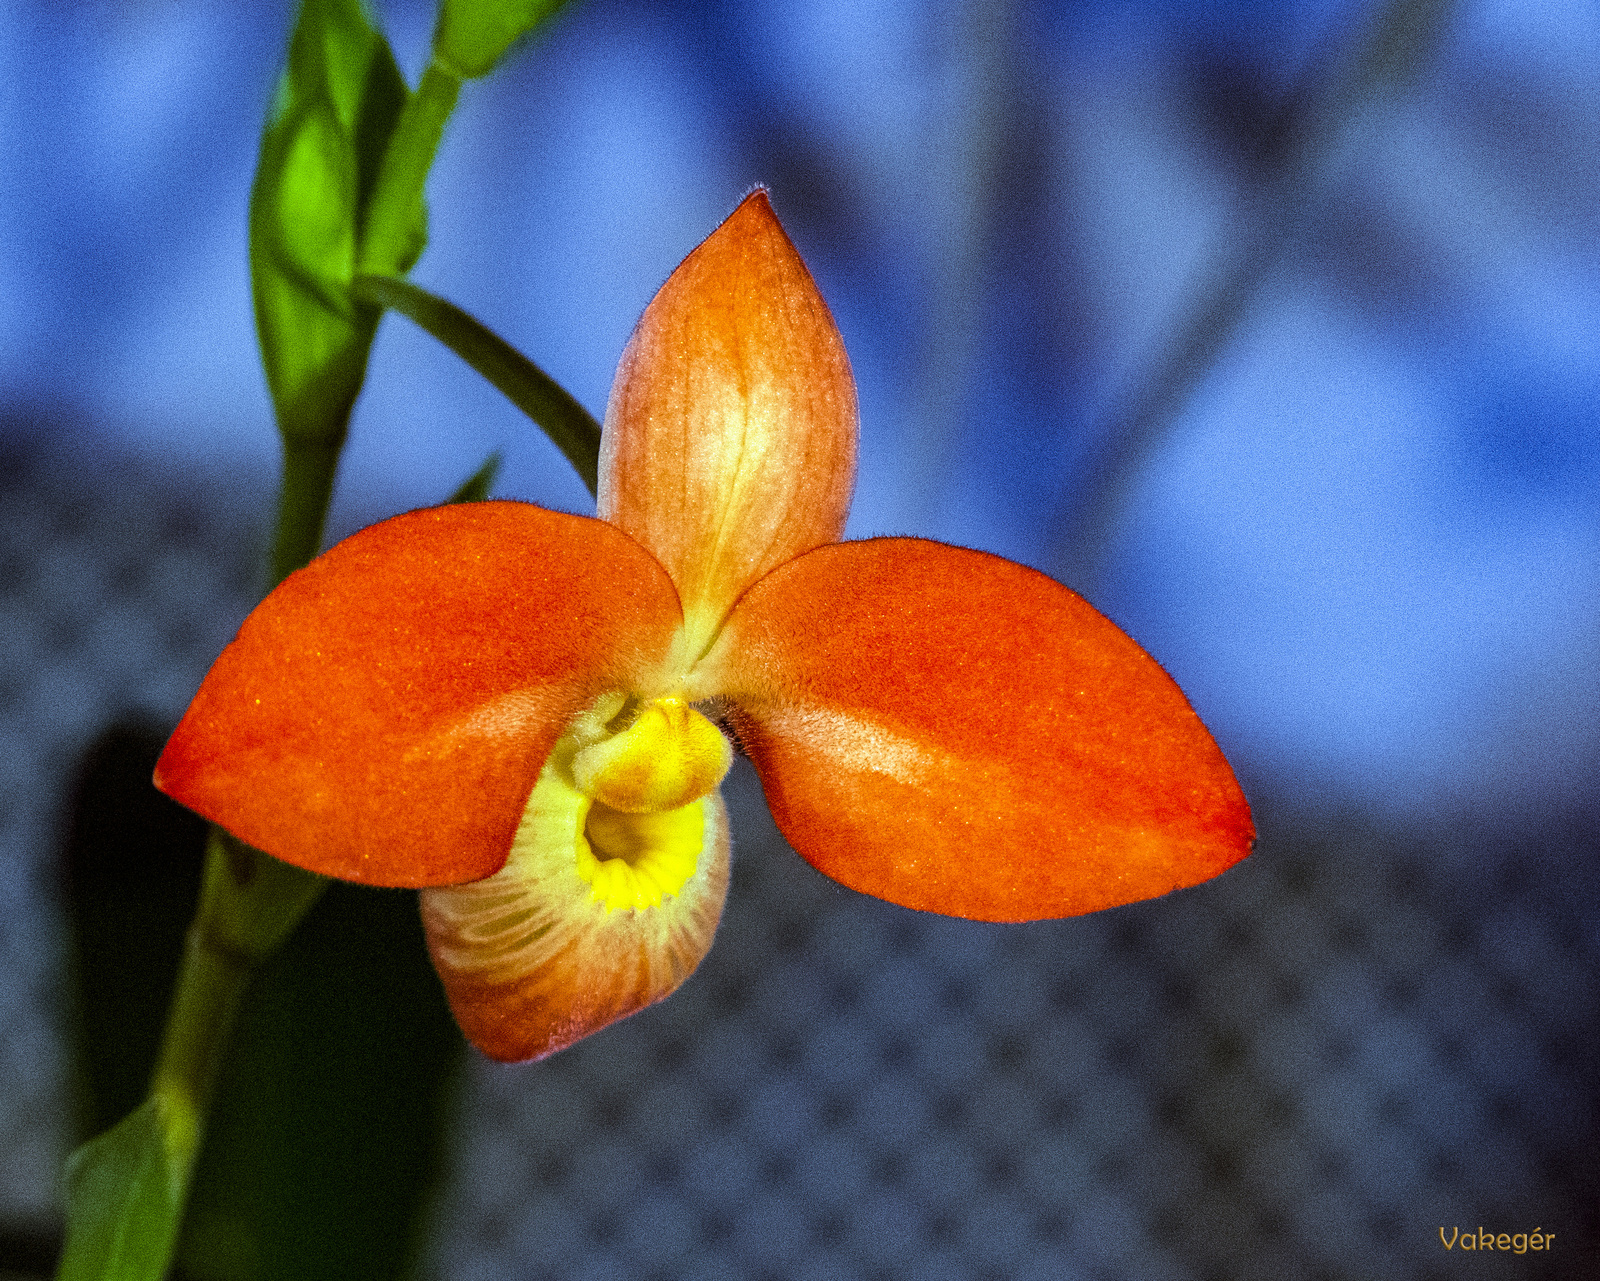 Orchidea - Phragmipedium bessea